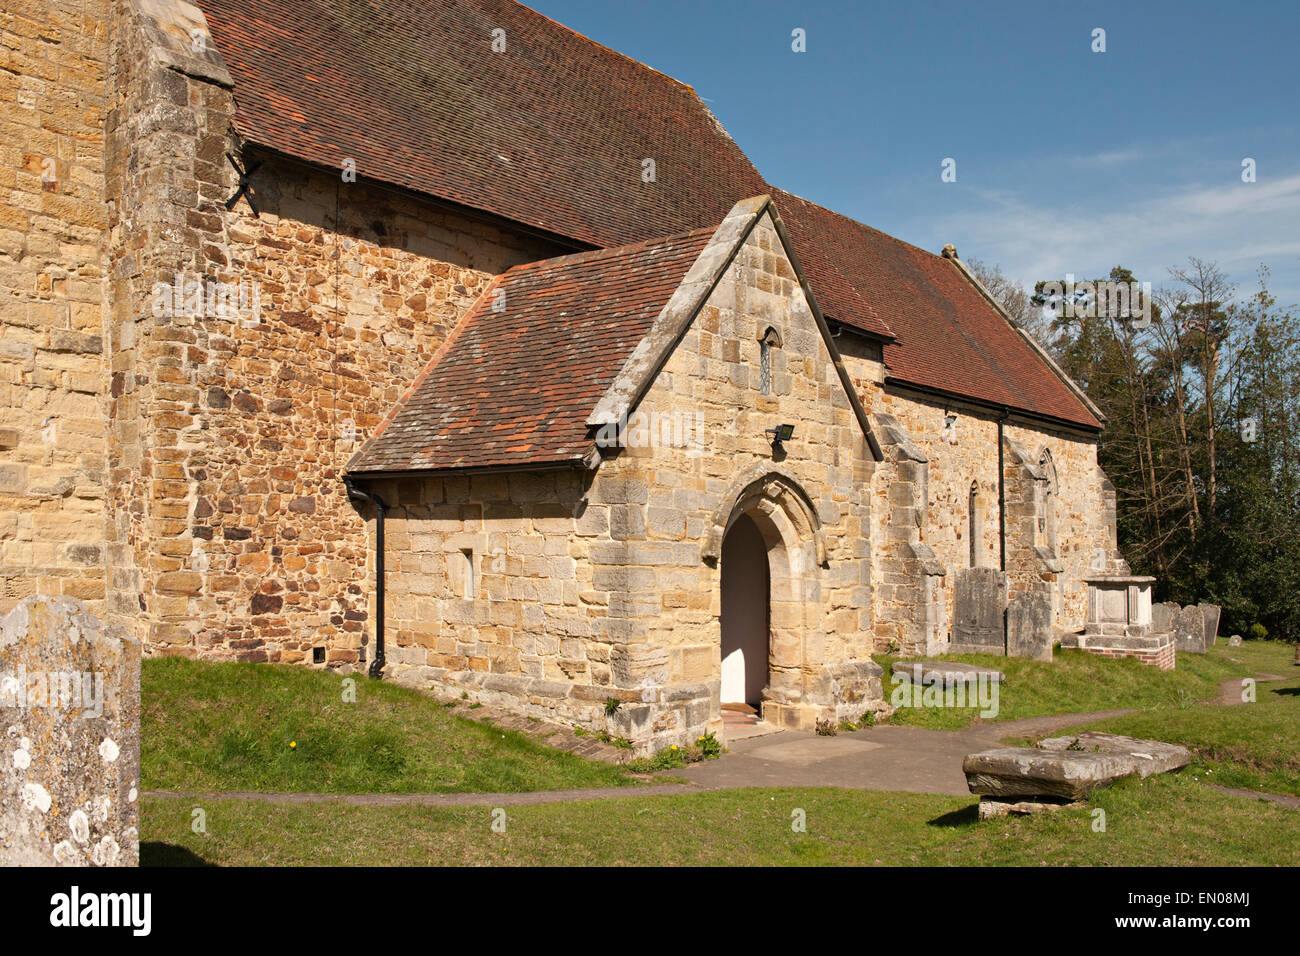 St. Peter's Old Church Pembury, Kent, UK Stock Photo